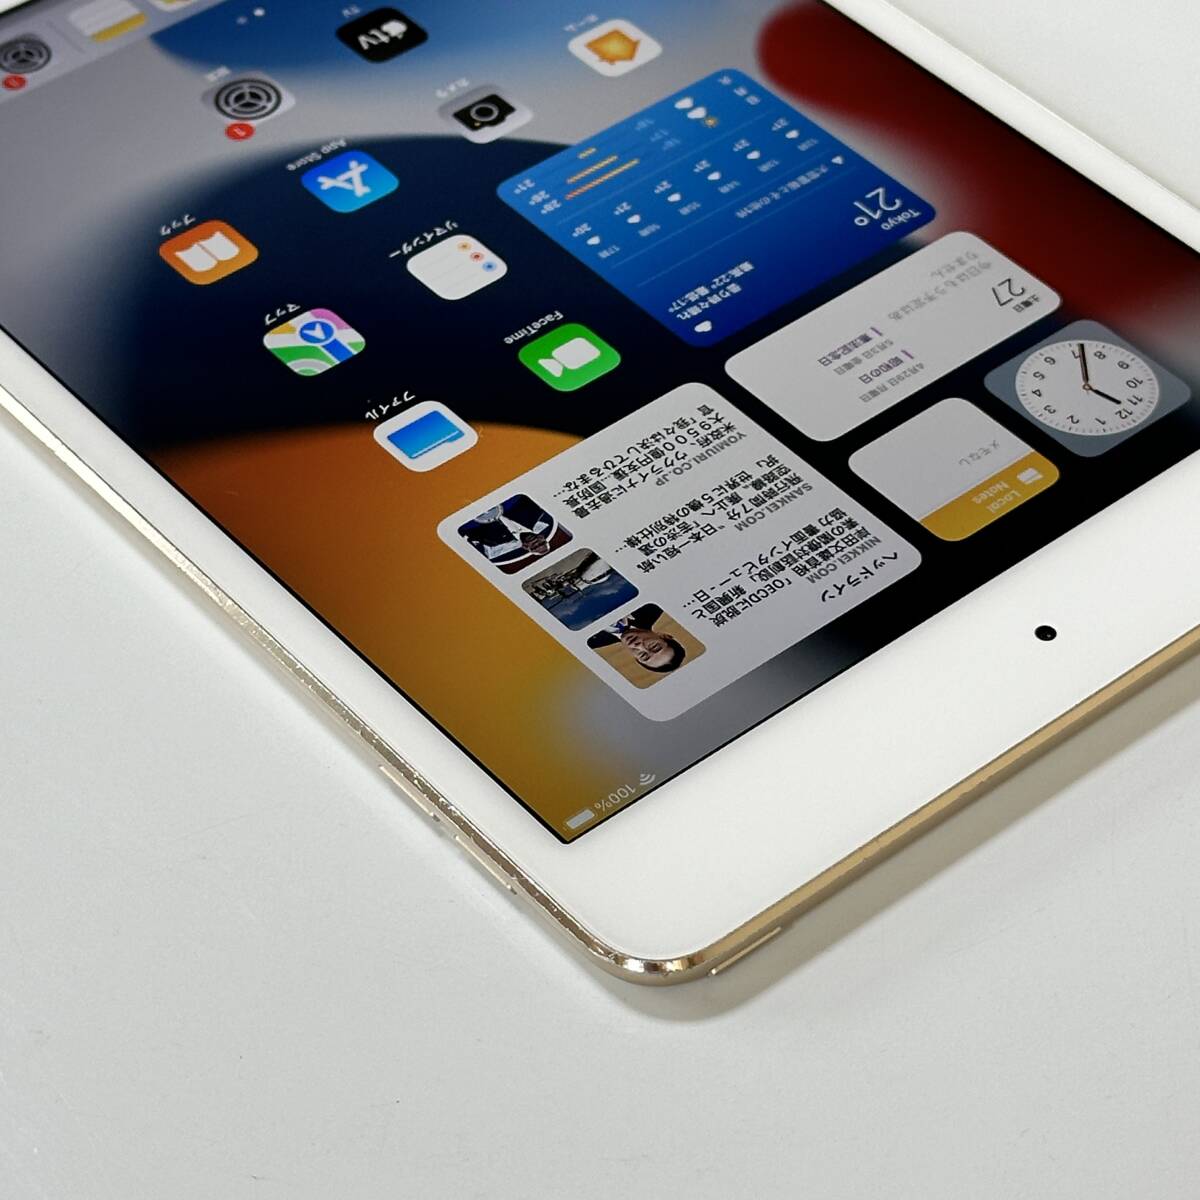 Apple iPad mini 4 Gold 64GB MK9J2J/A Wi-Fi model iOS15.8.2 Acty beige .n lock released 